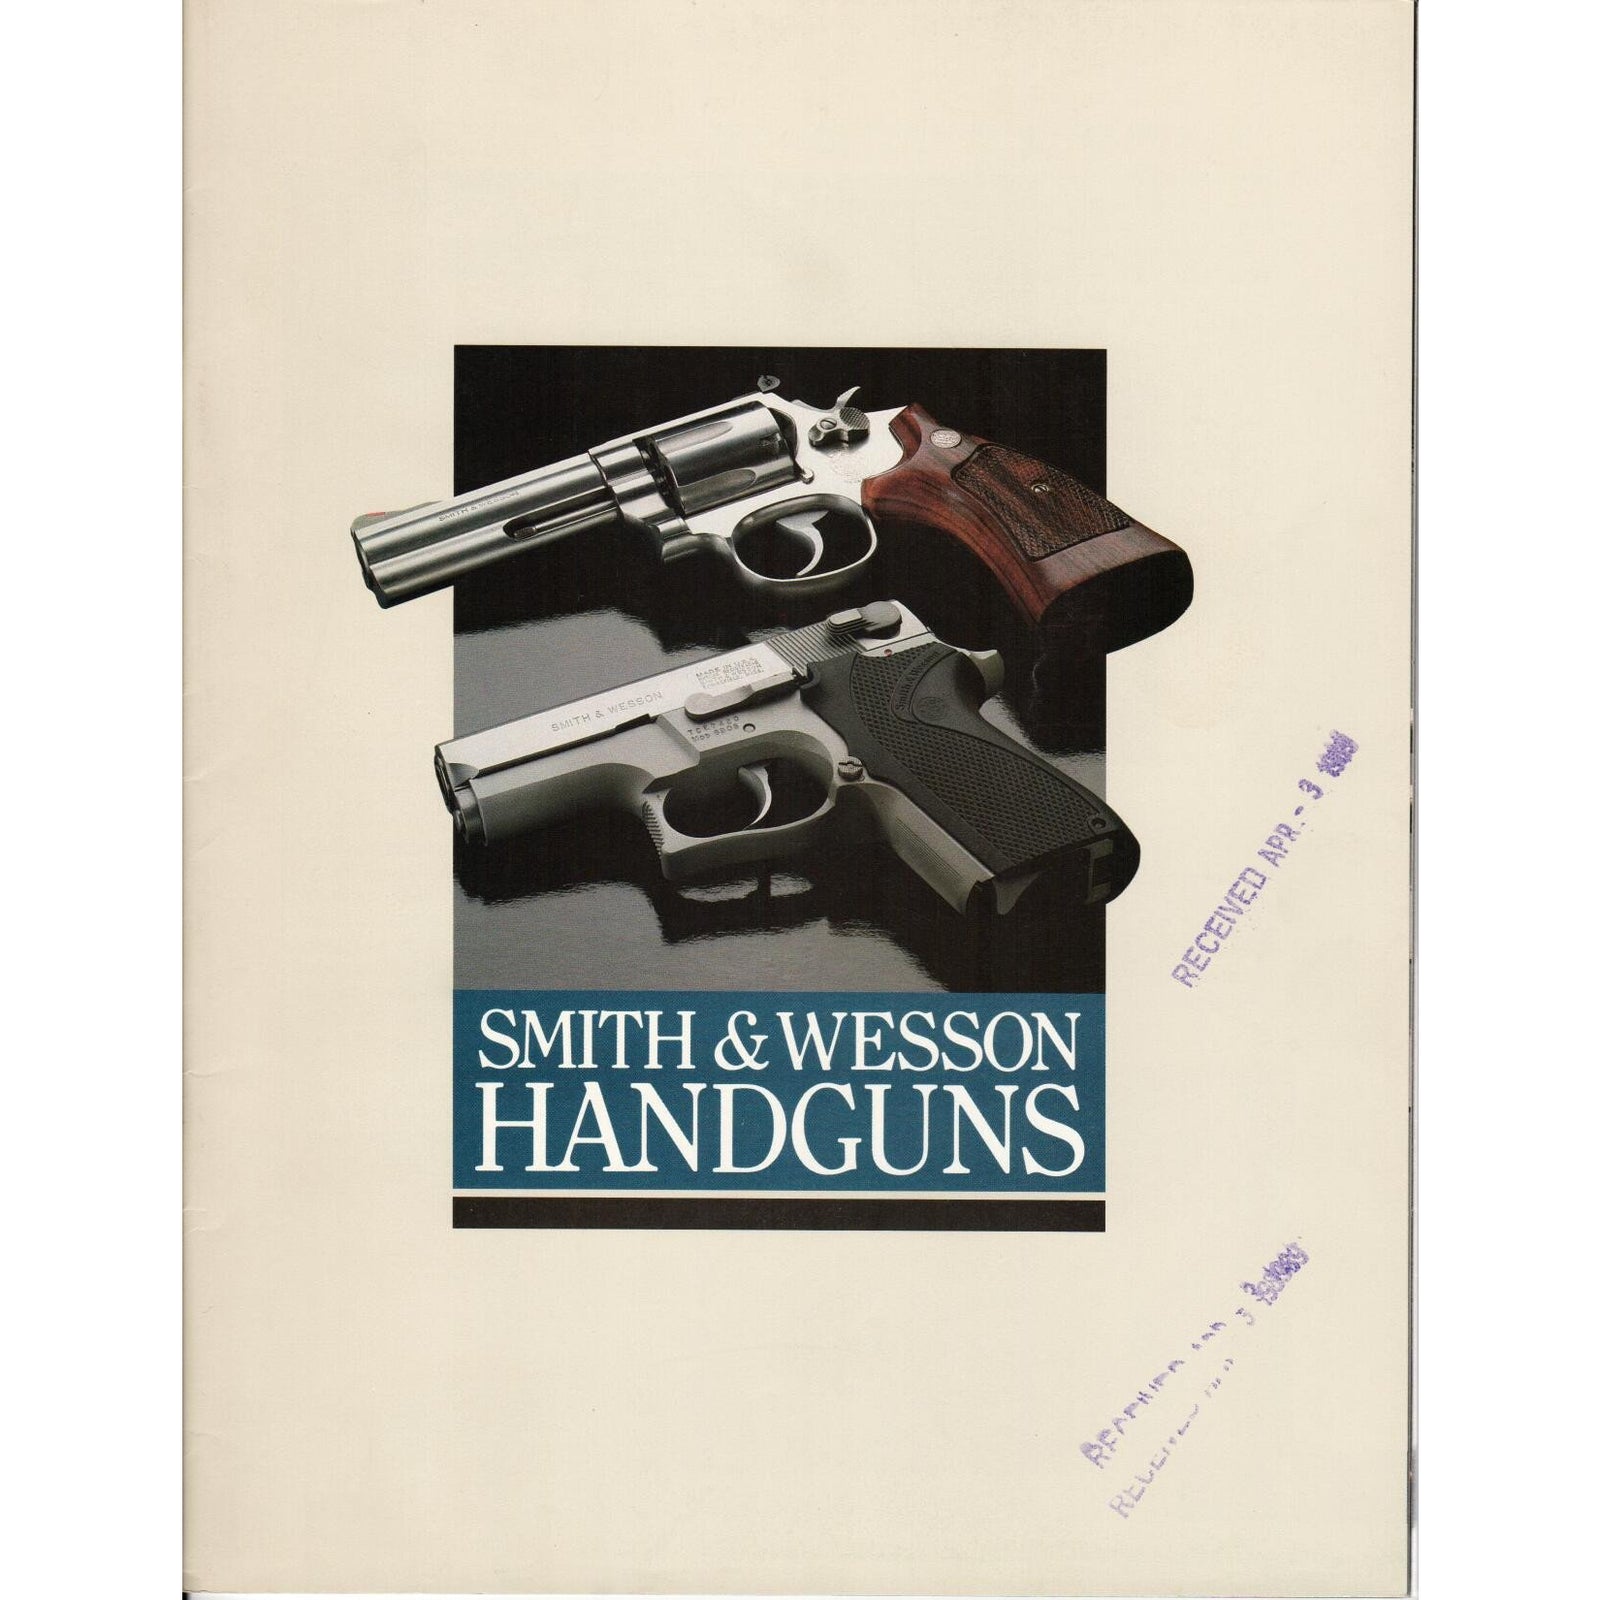 Smith & Wesson Handguns 1989